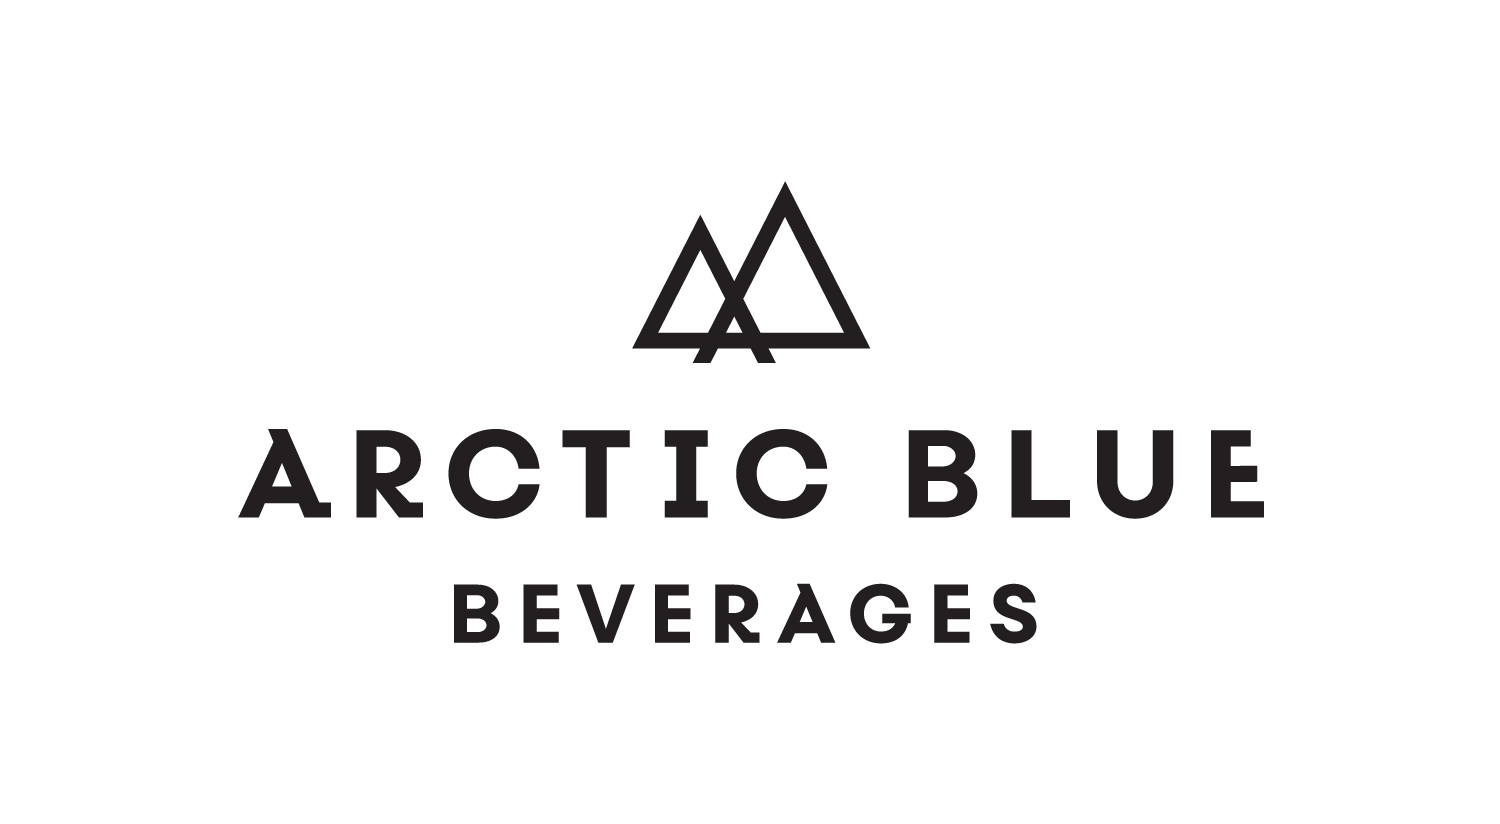 Arctic Blue Beverages Oy